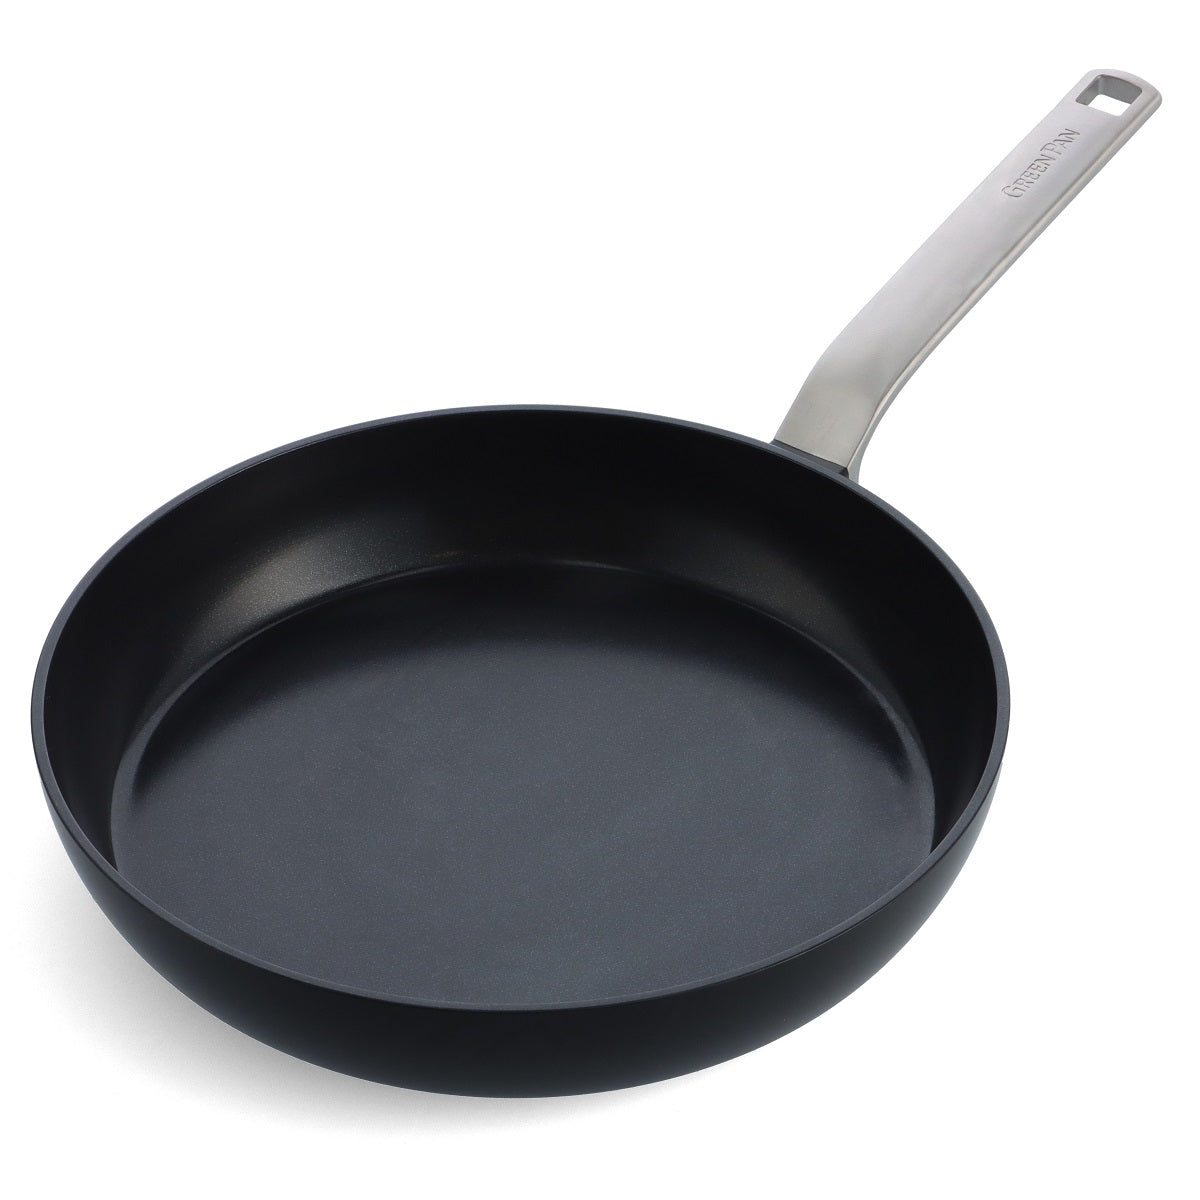 CC006596-001 - Evolution Frying Pan, Black - 28cm - Product Image 1